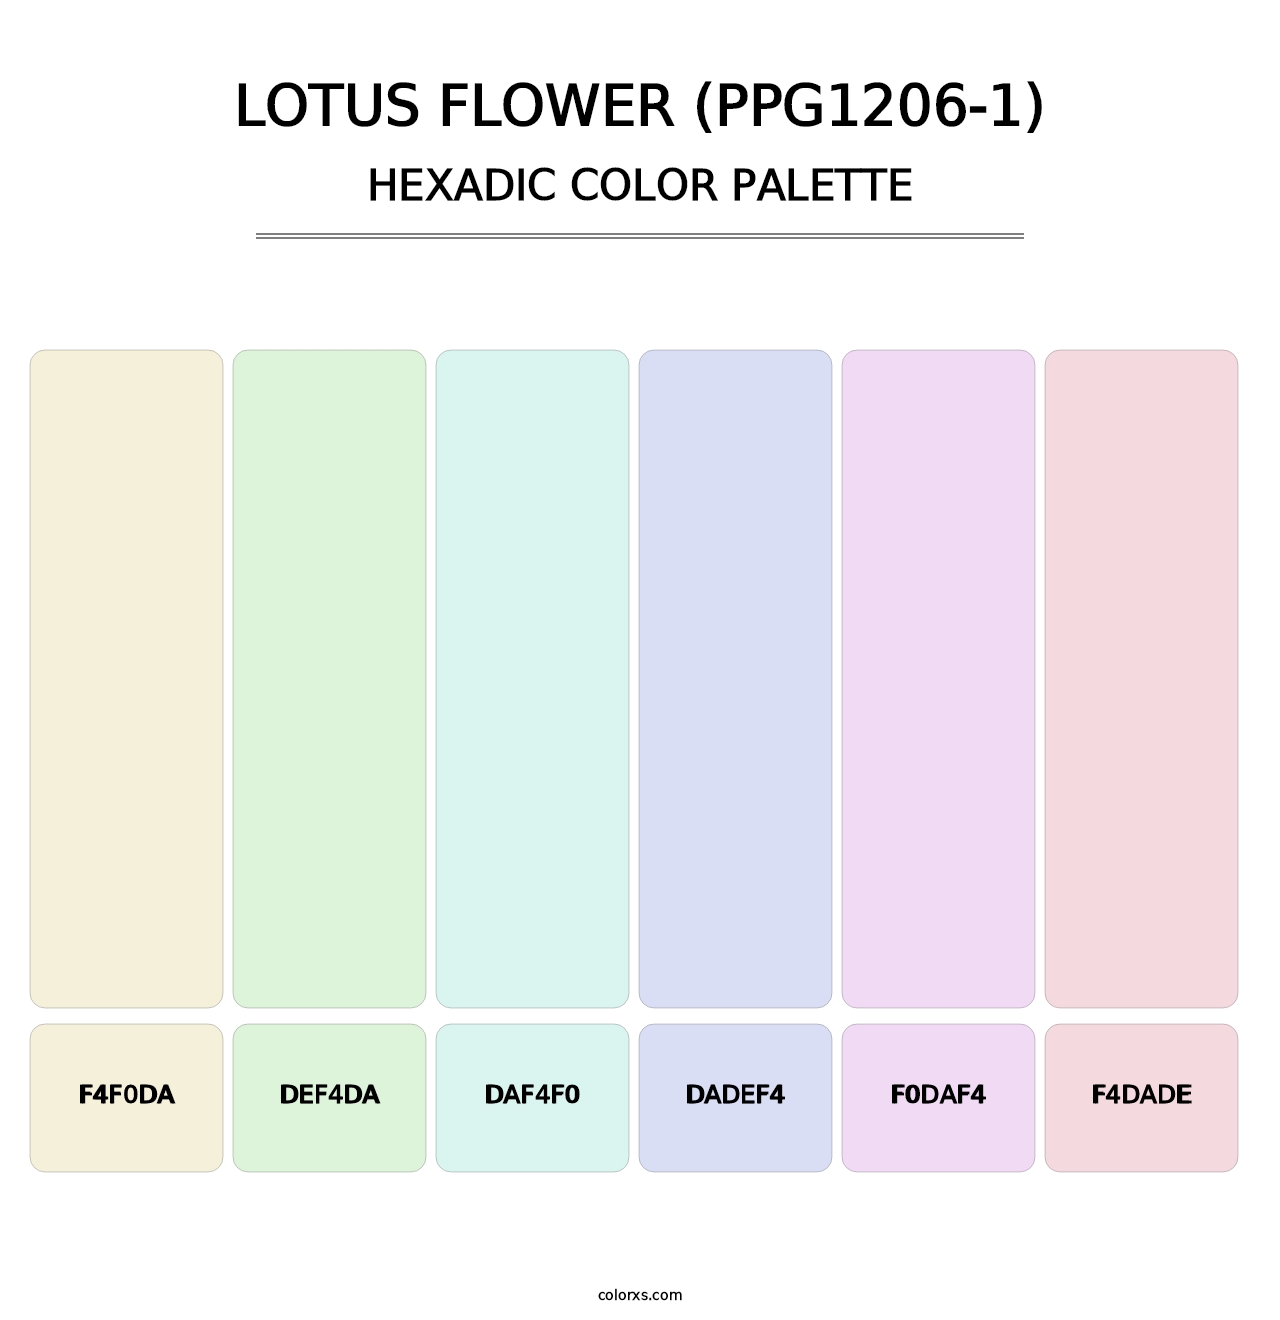 Lotus Flower (PPG1206-1) - Hexadic Color Palette